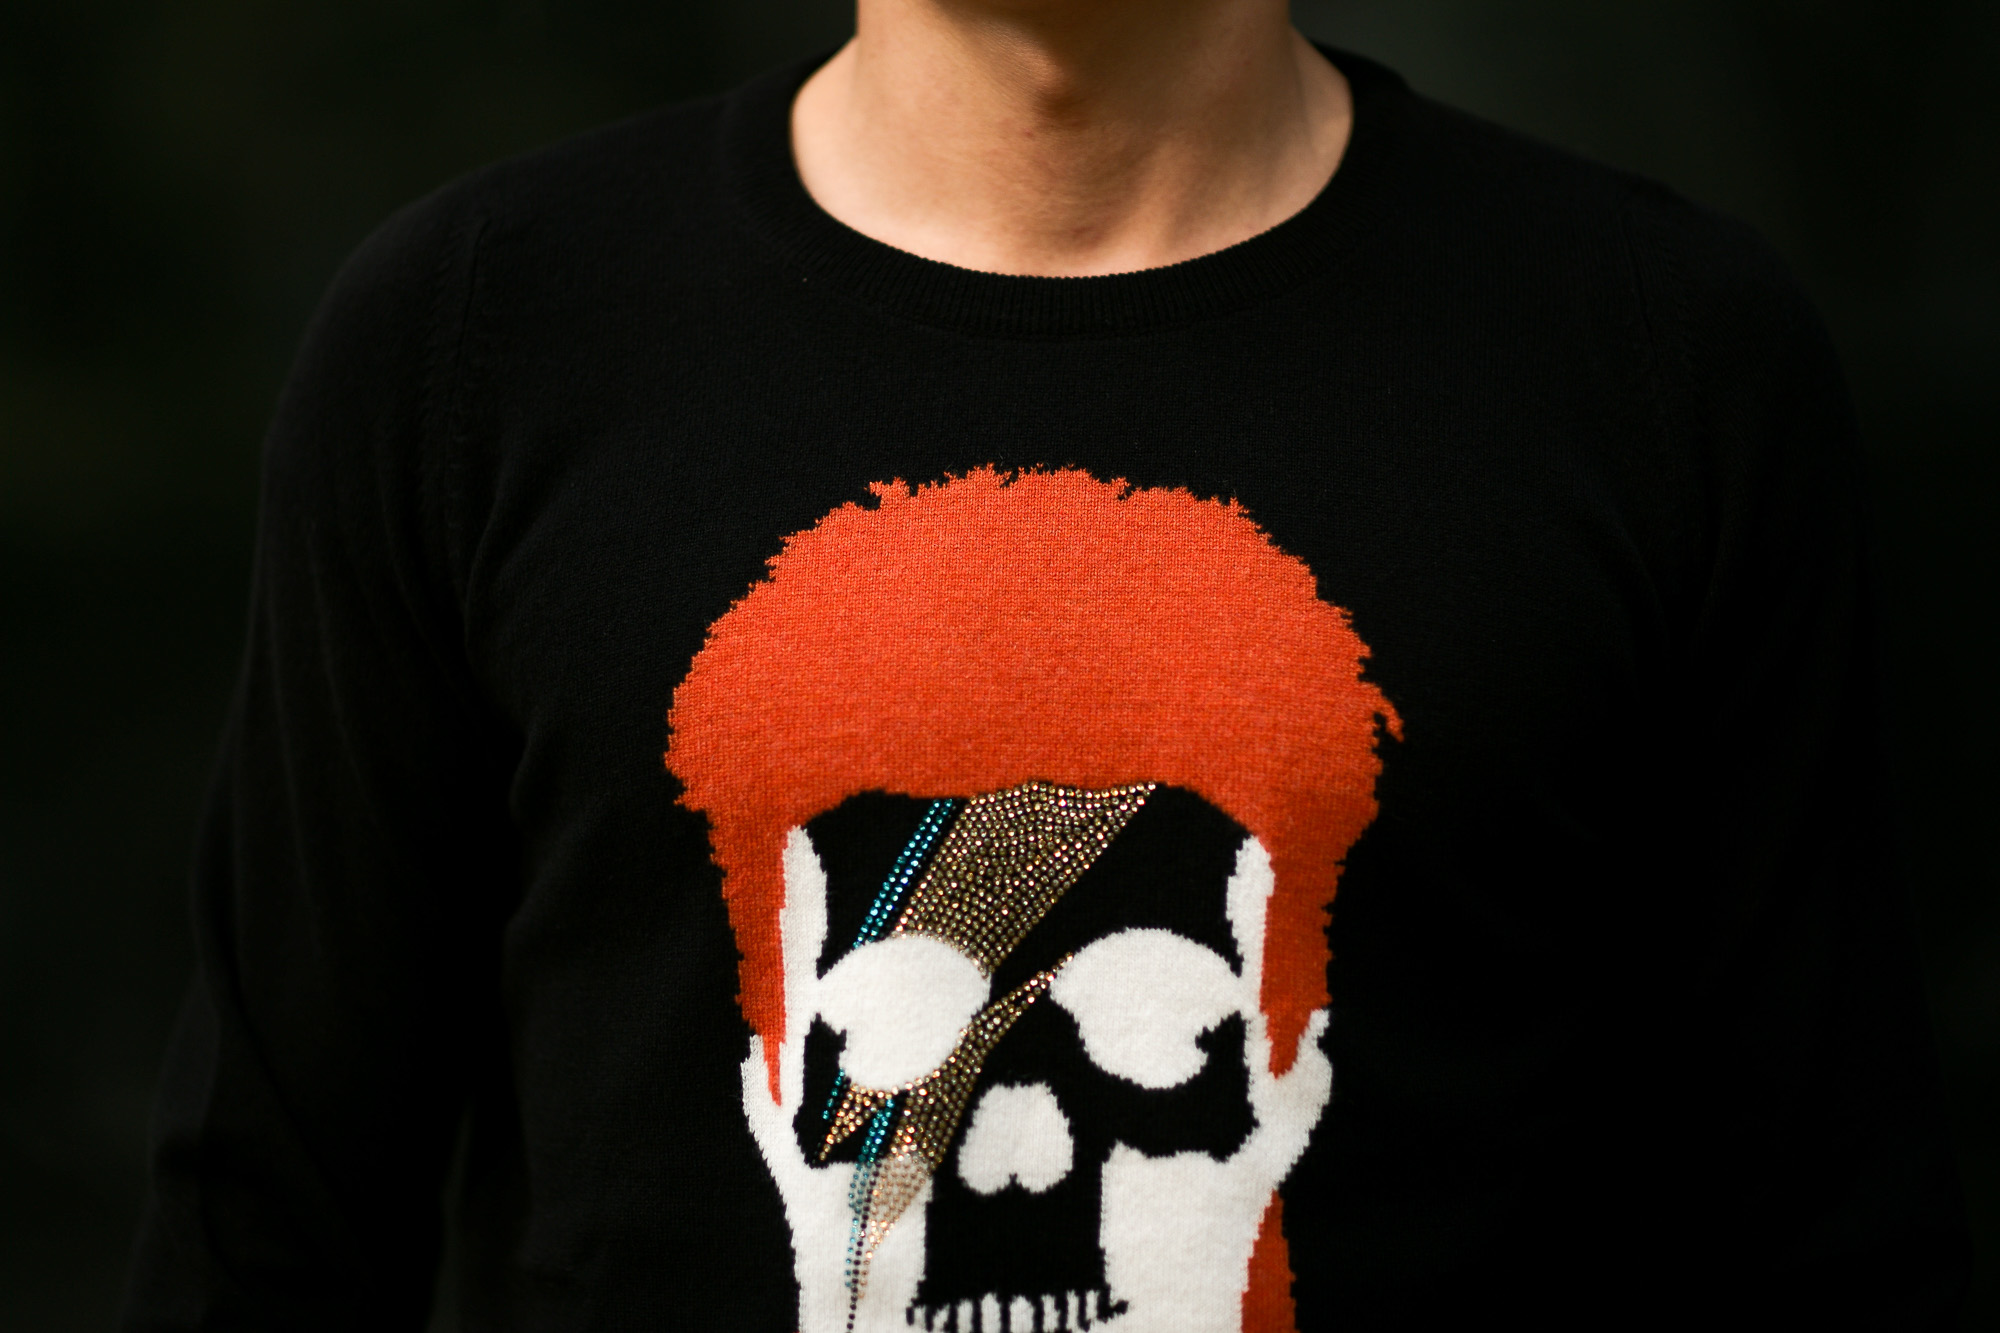 lucien pellat-finet(ルシアン ペラフィネ) David Bowie Skull Cashmere Sweater (デヴィッド ボウイ スカル カシミア セーター) インターシャ カシミア スカル セーター BLACK × NIVEOUS (ブラック × ホワイト) 愛知 名古屋 altoediritto アルトエデリット